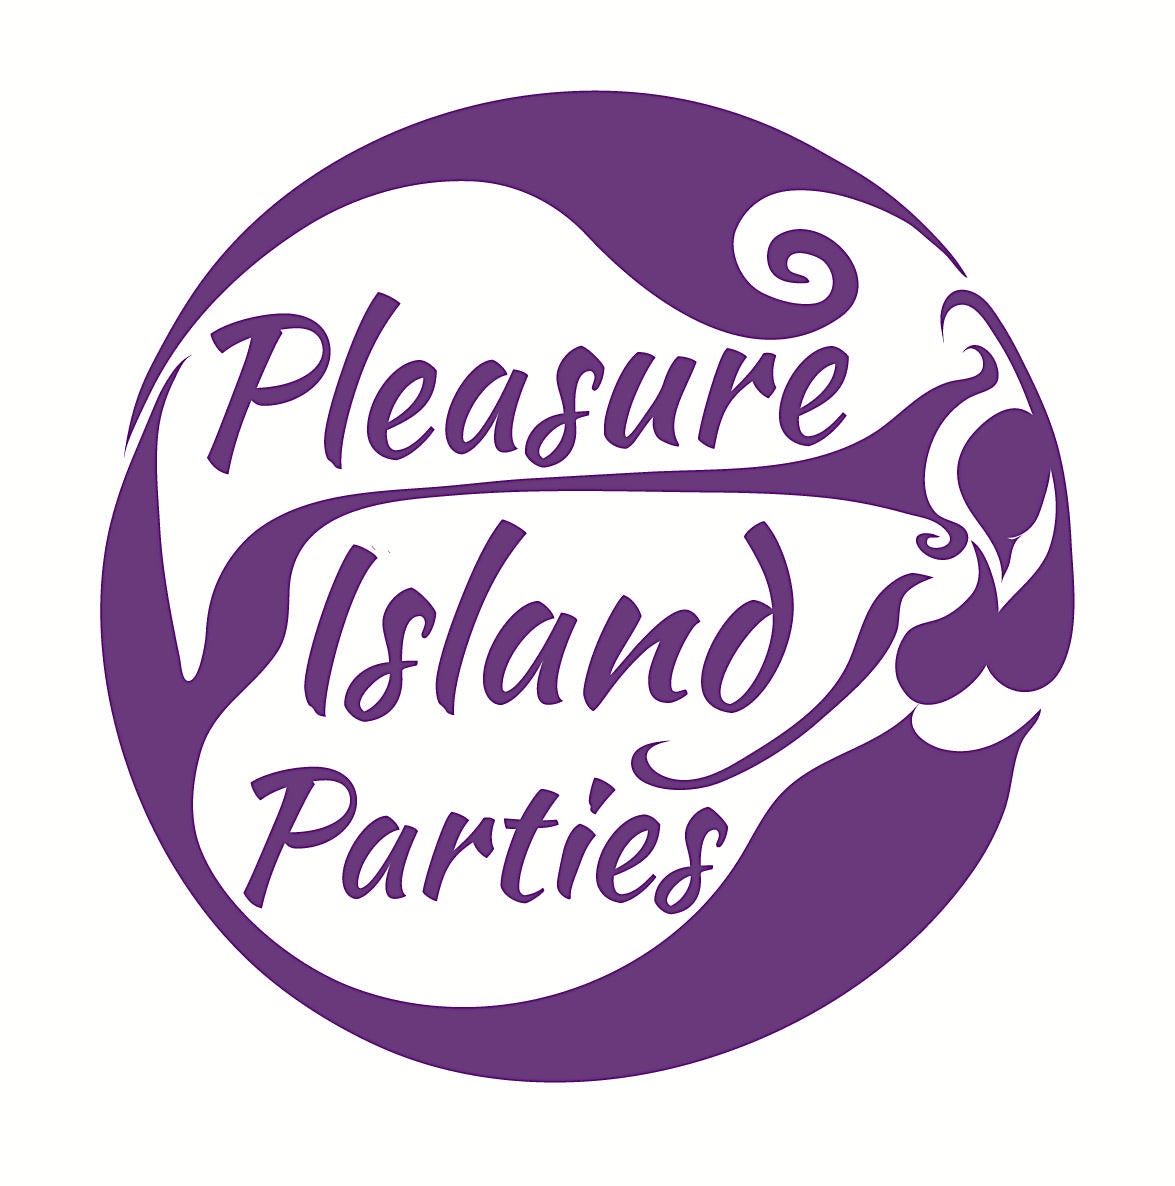 Pleasure Island -Saturday 7th  September - London